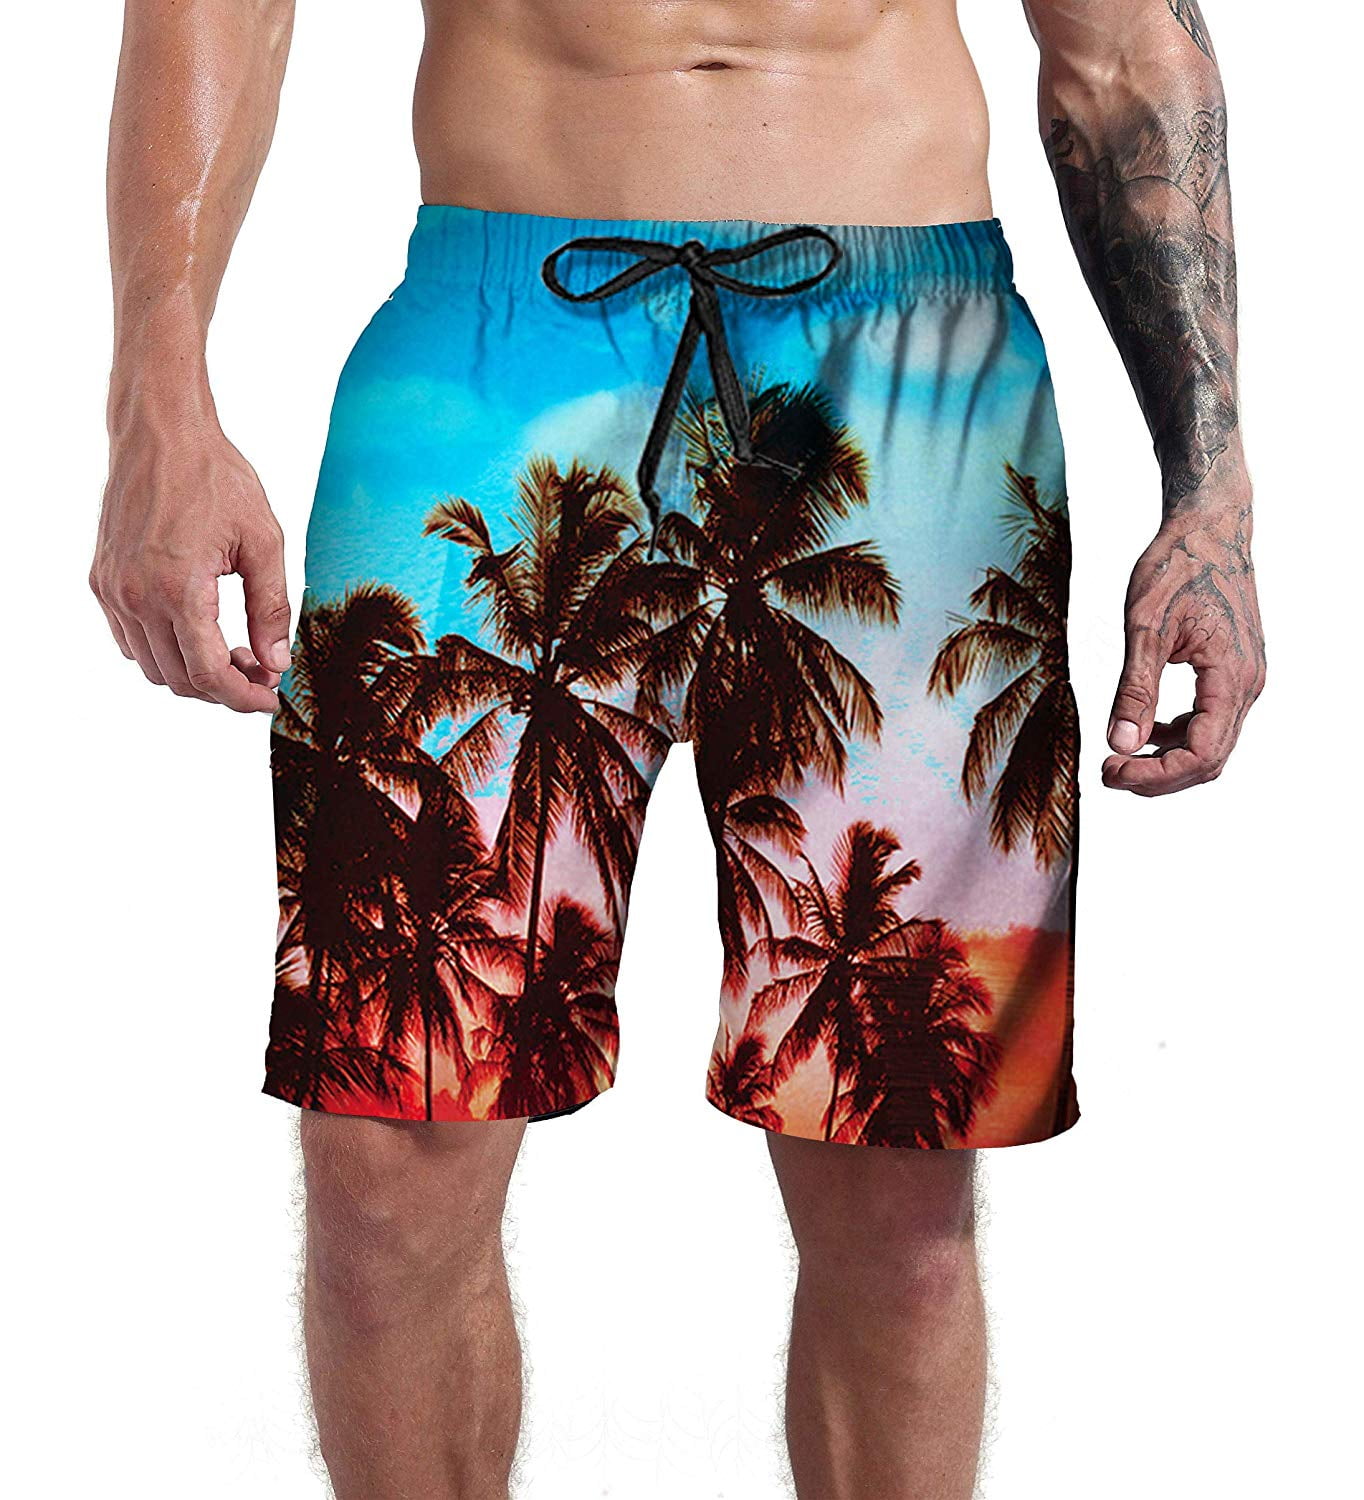 Goodstoworld - Men's Hawaiian Swim Trunks Vacation Beach Theme ...